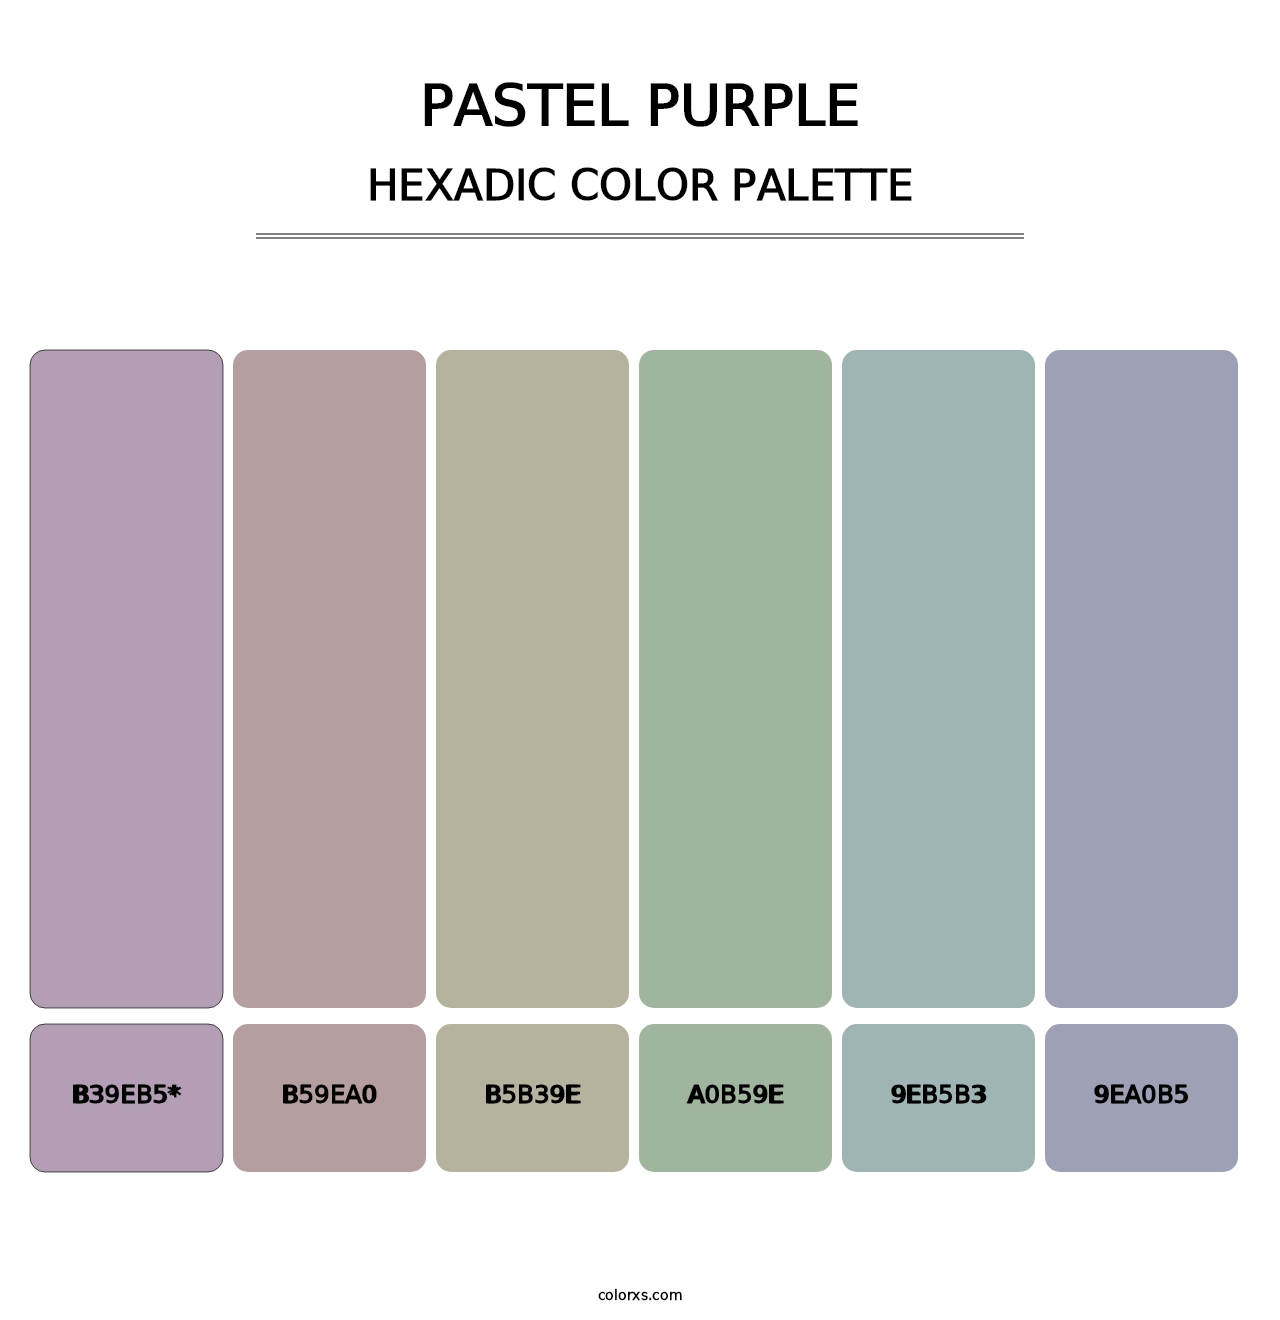 Pastel Purple - Hexadic Color Palette